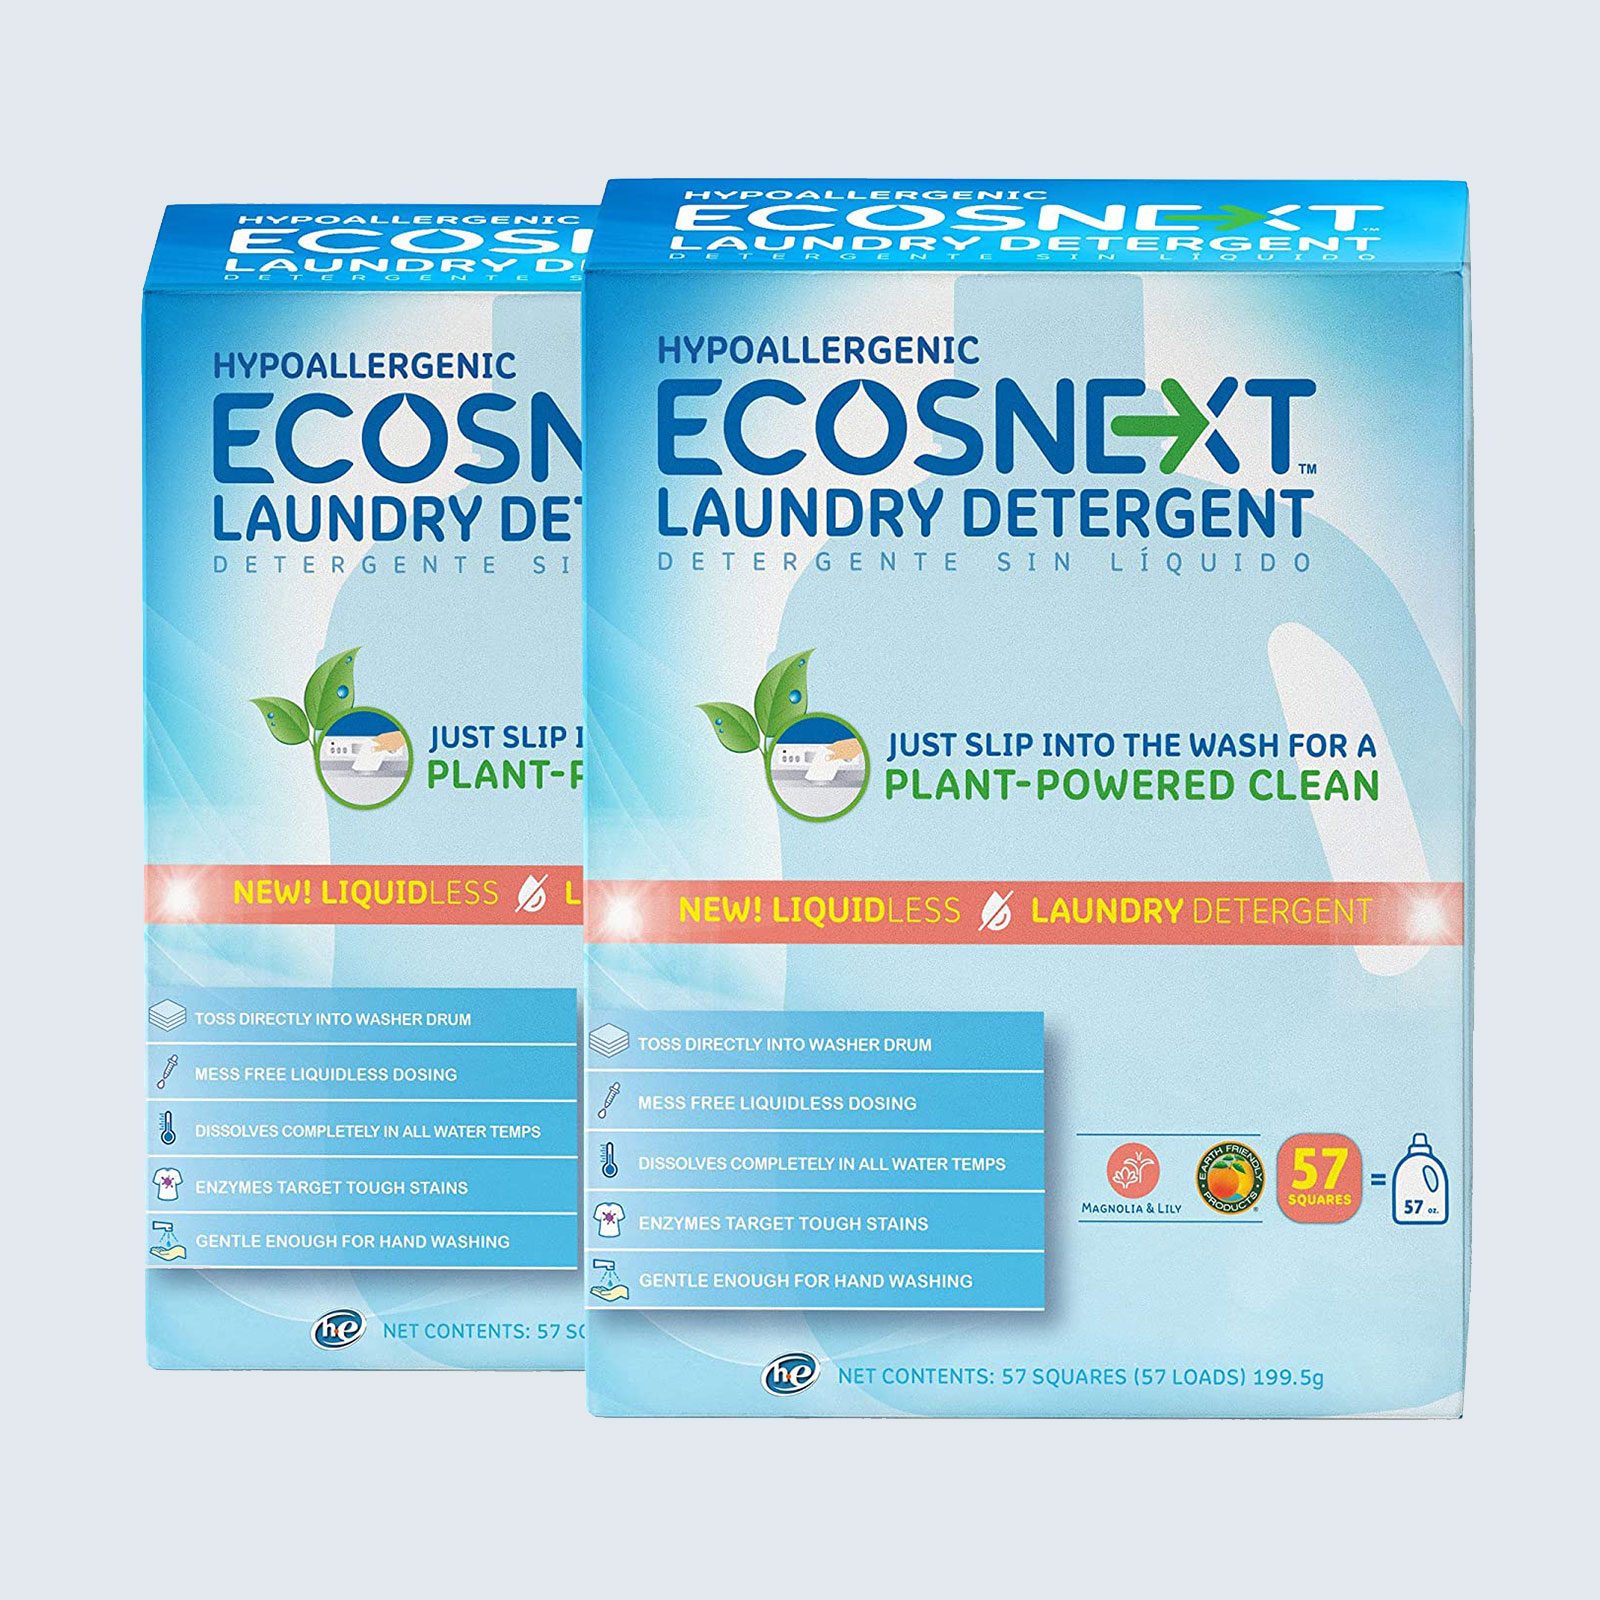 10 Safest Laundry Detergents 2021 — NonToxic, EcoFriendly Detergent